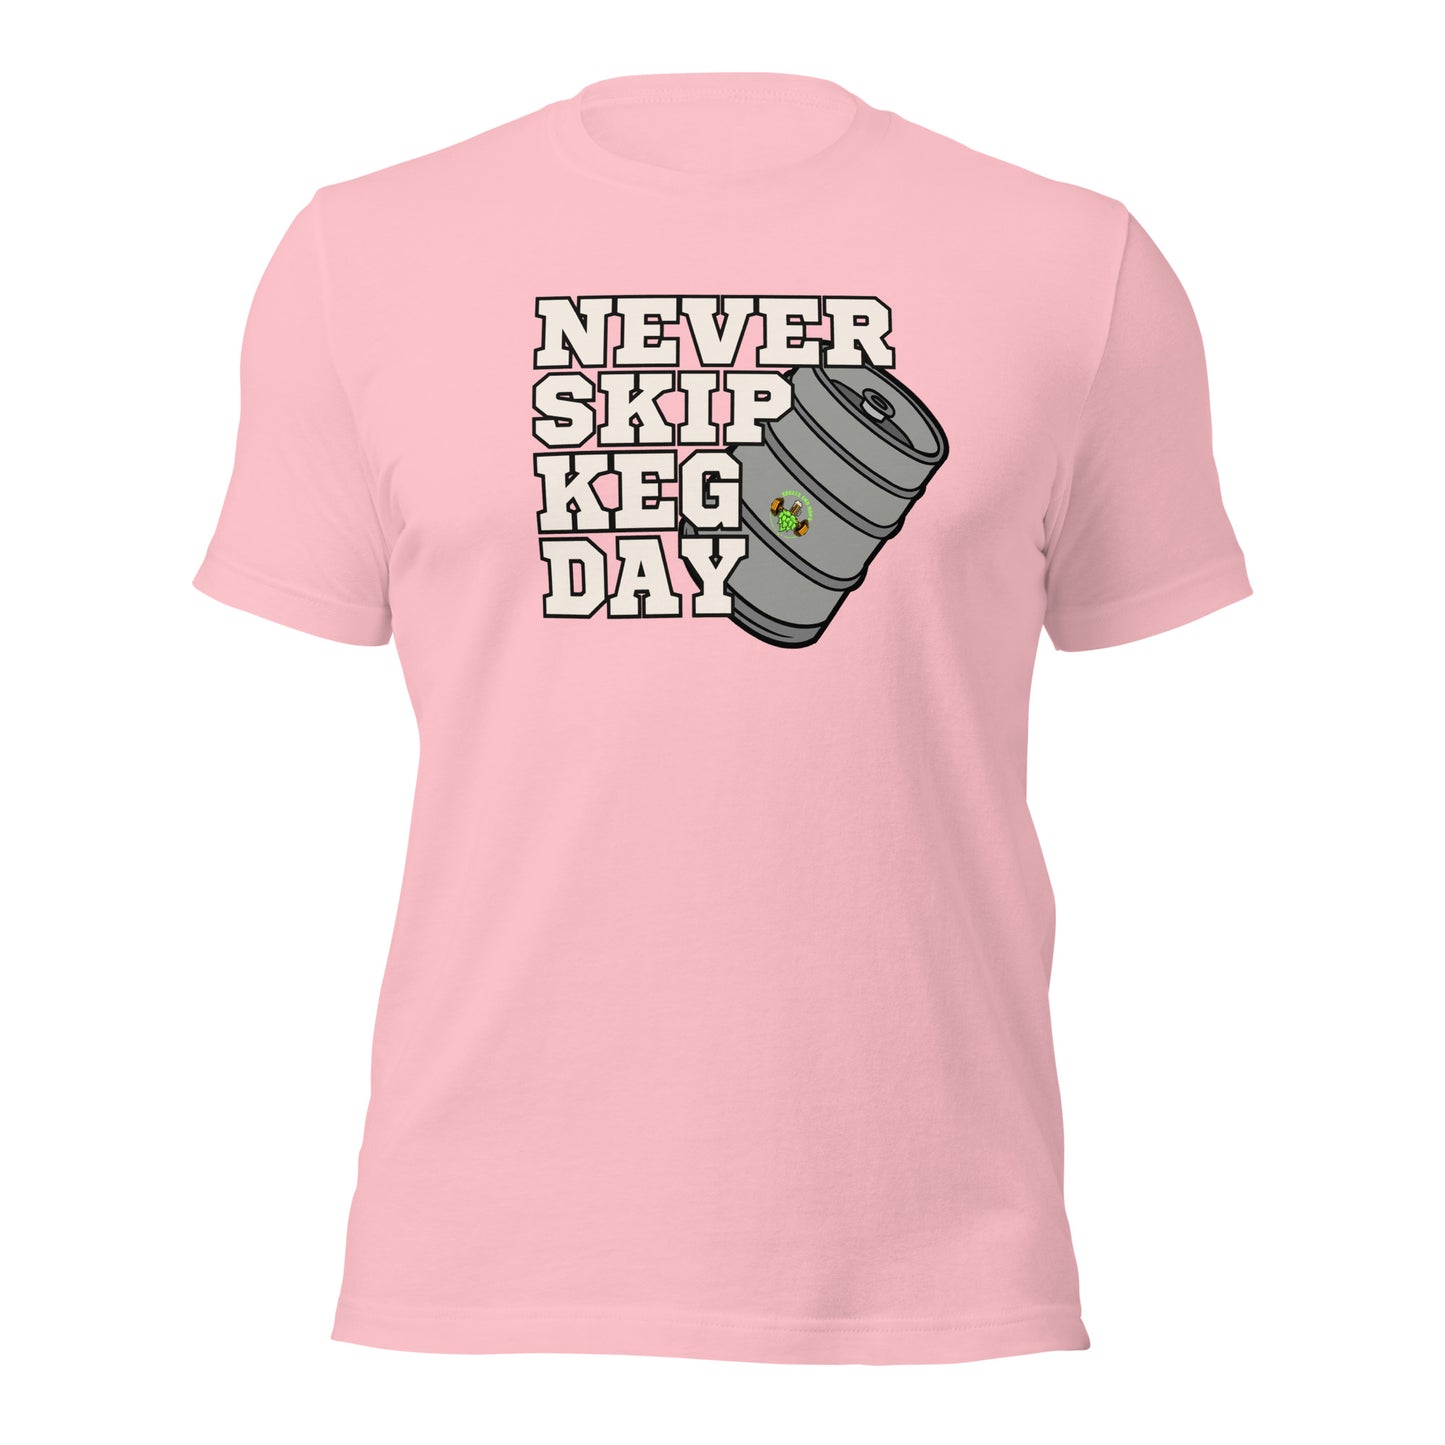 Keg Day T-Shirt